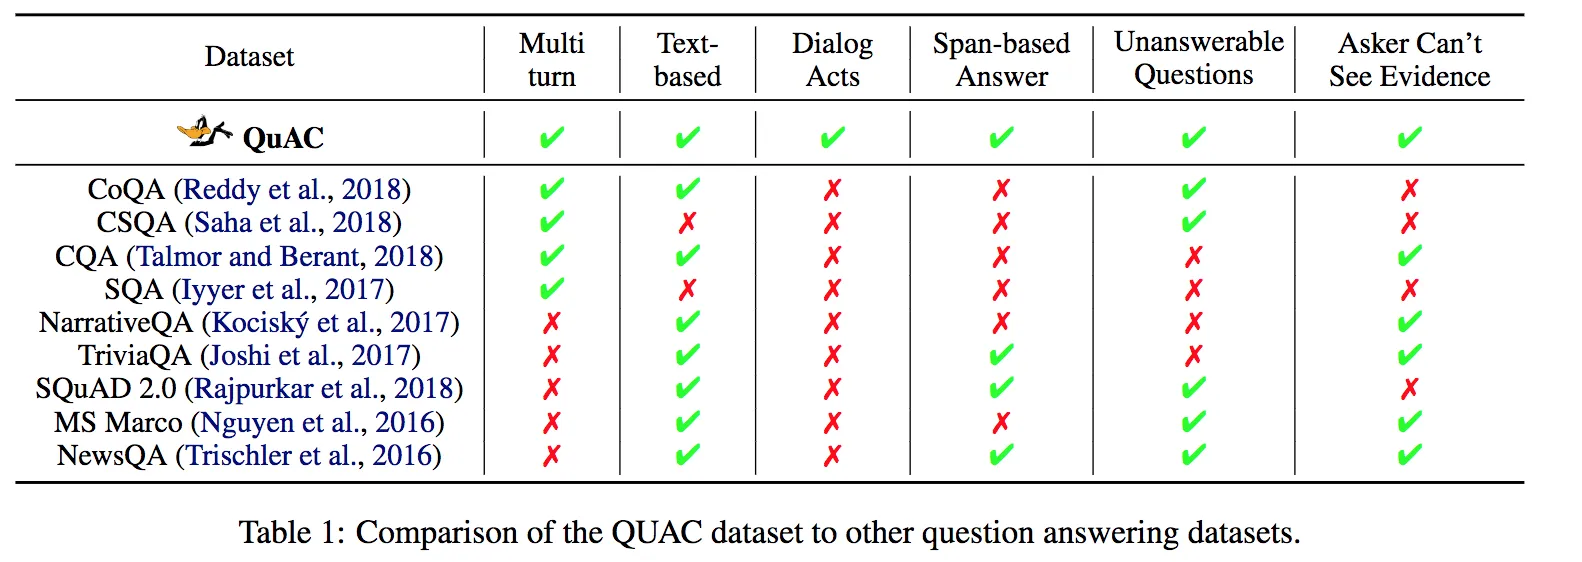 QuAC Comparison to Other Datasets